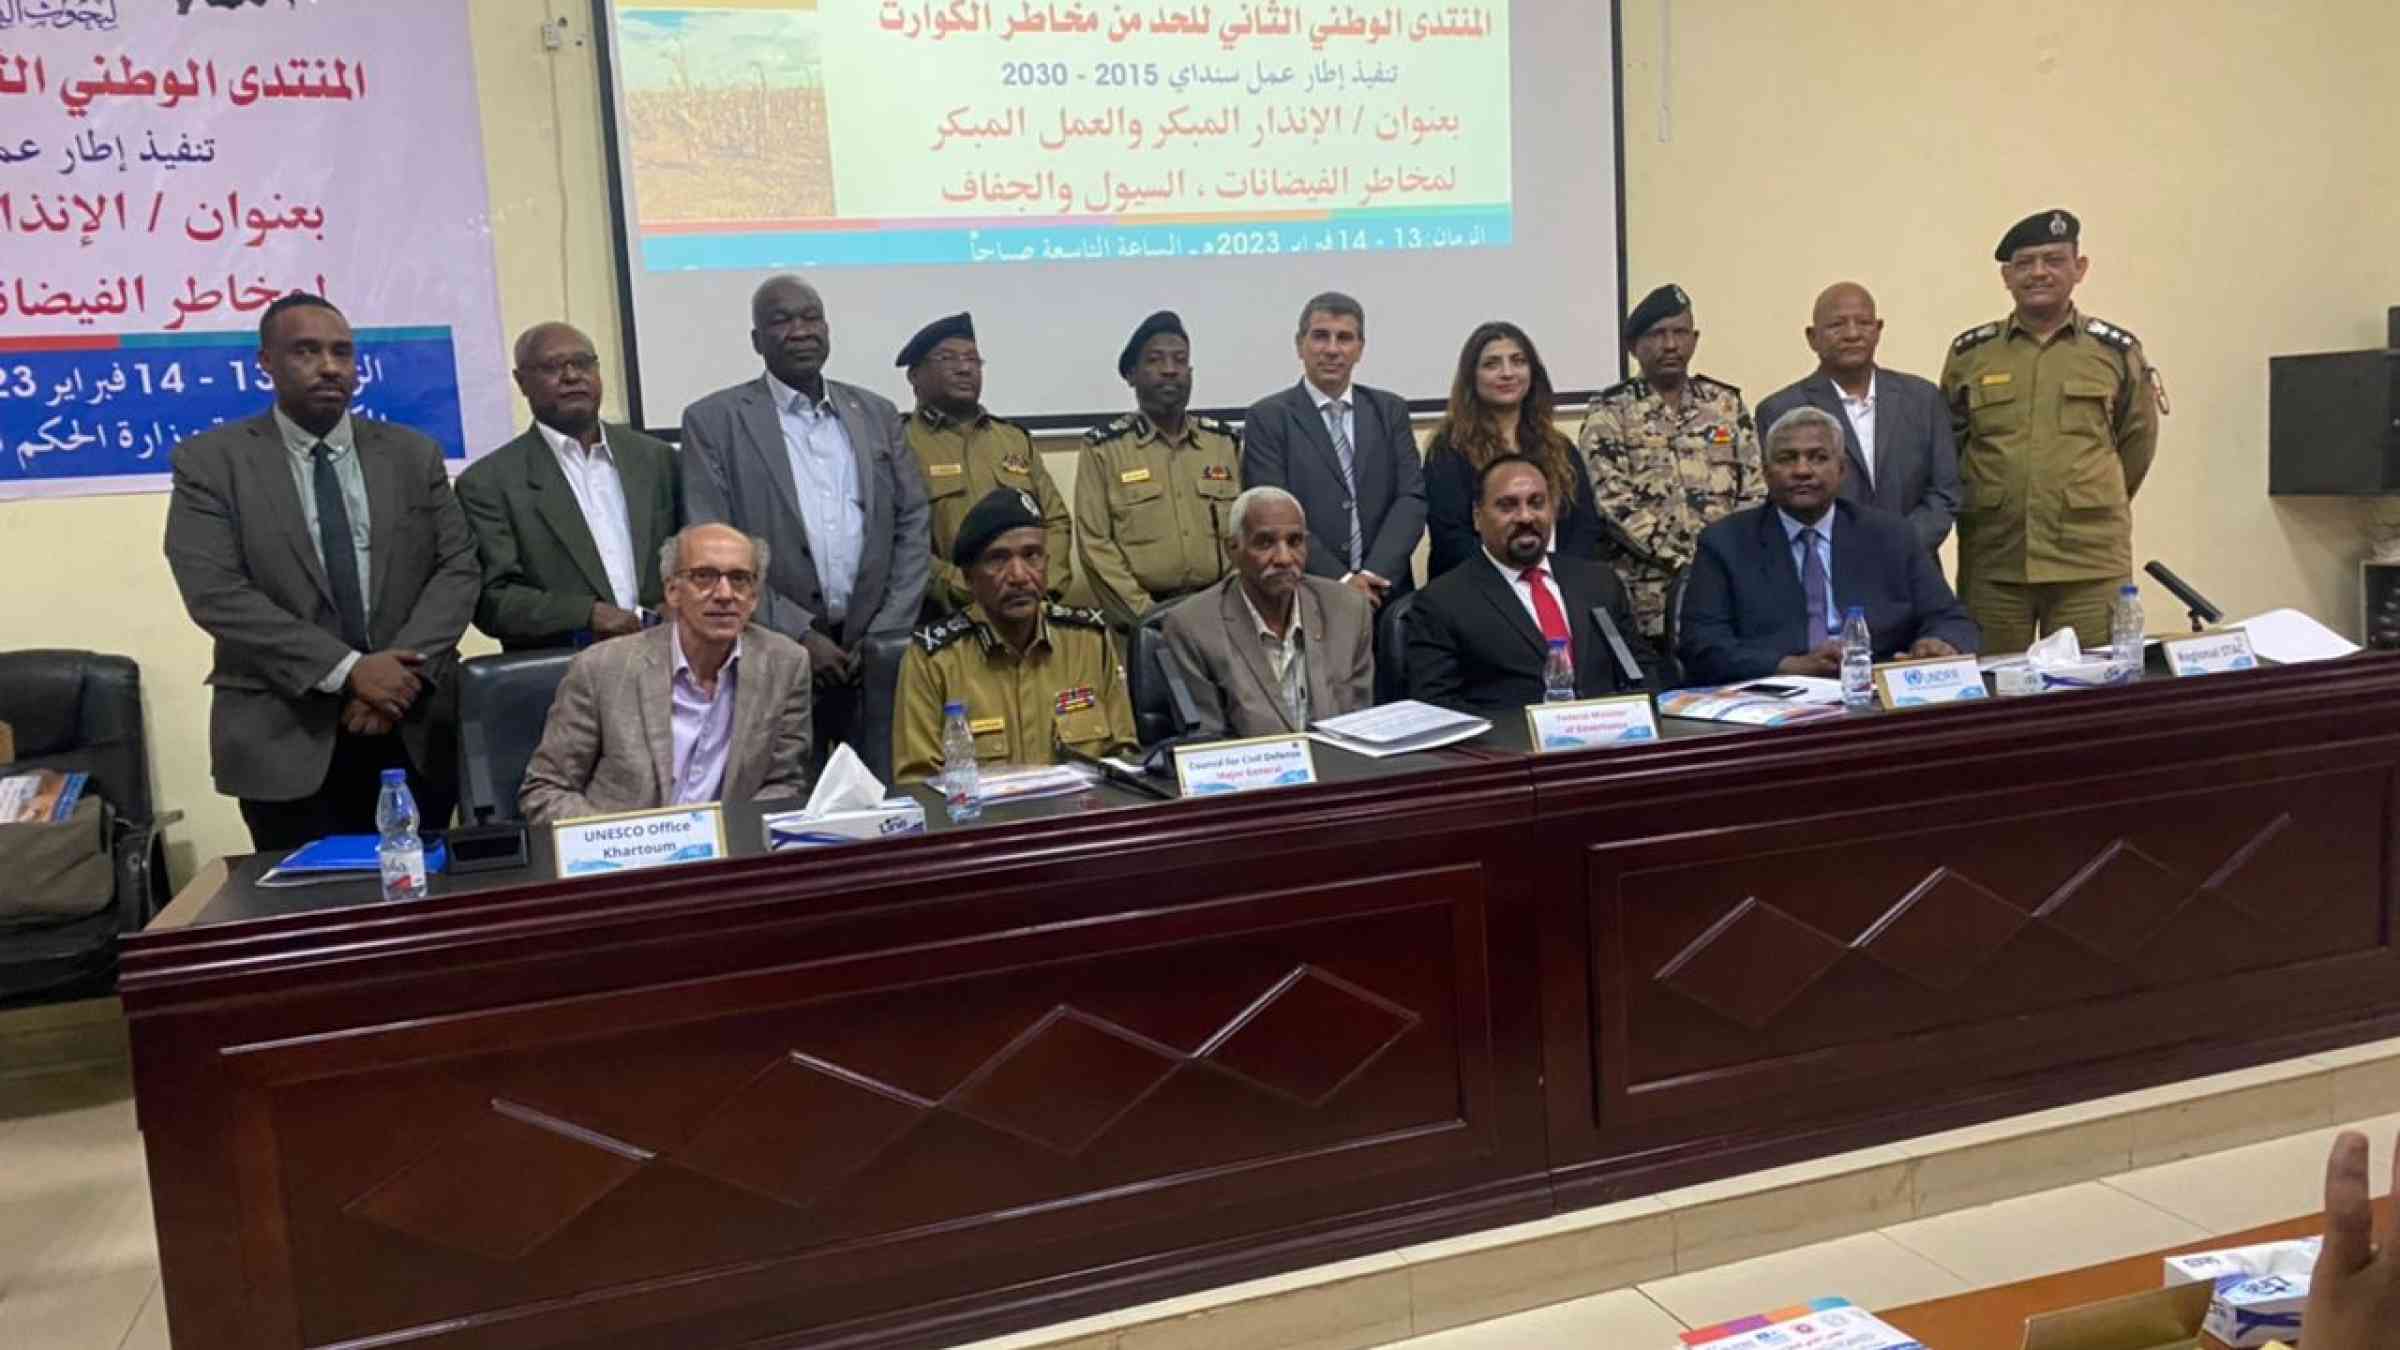 Second National Platform for Disaster Risk Reduction in Sudan